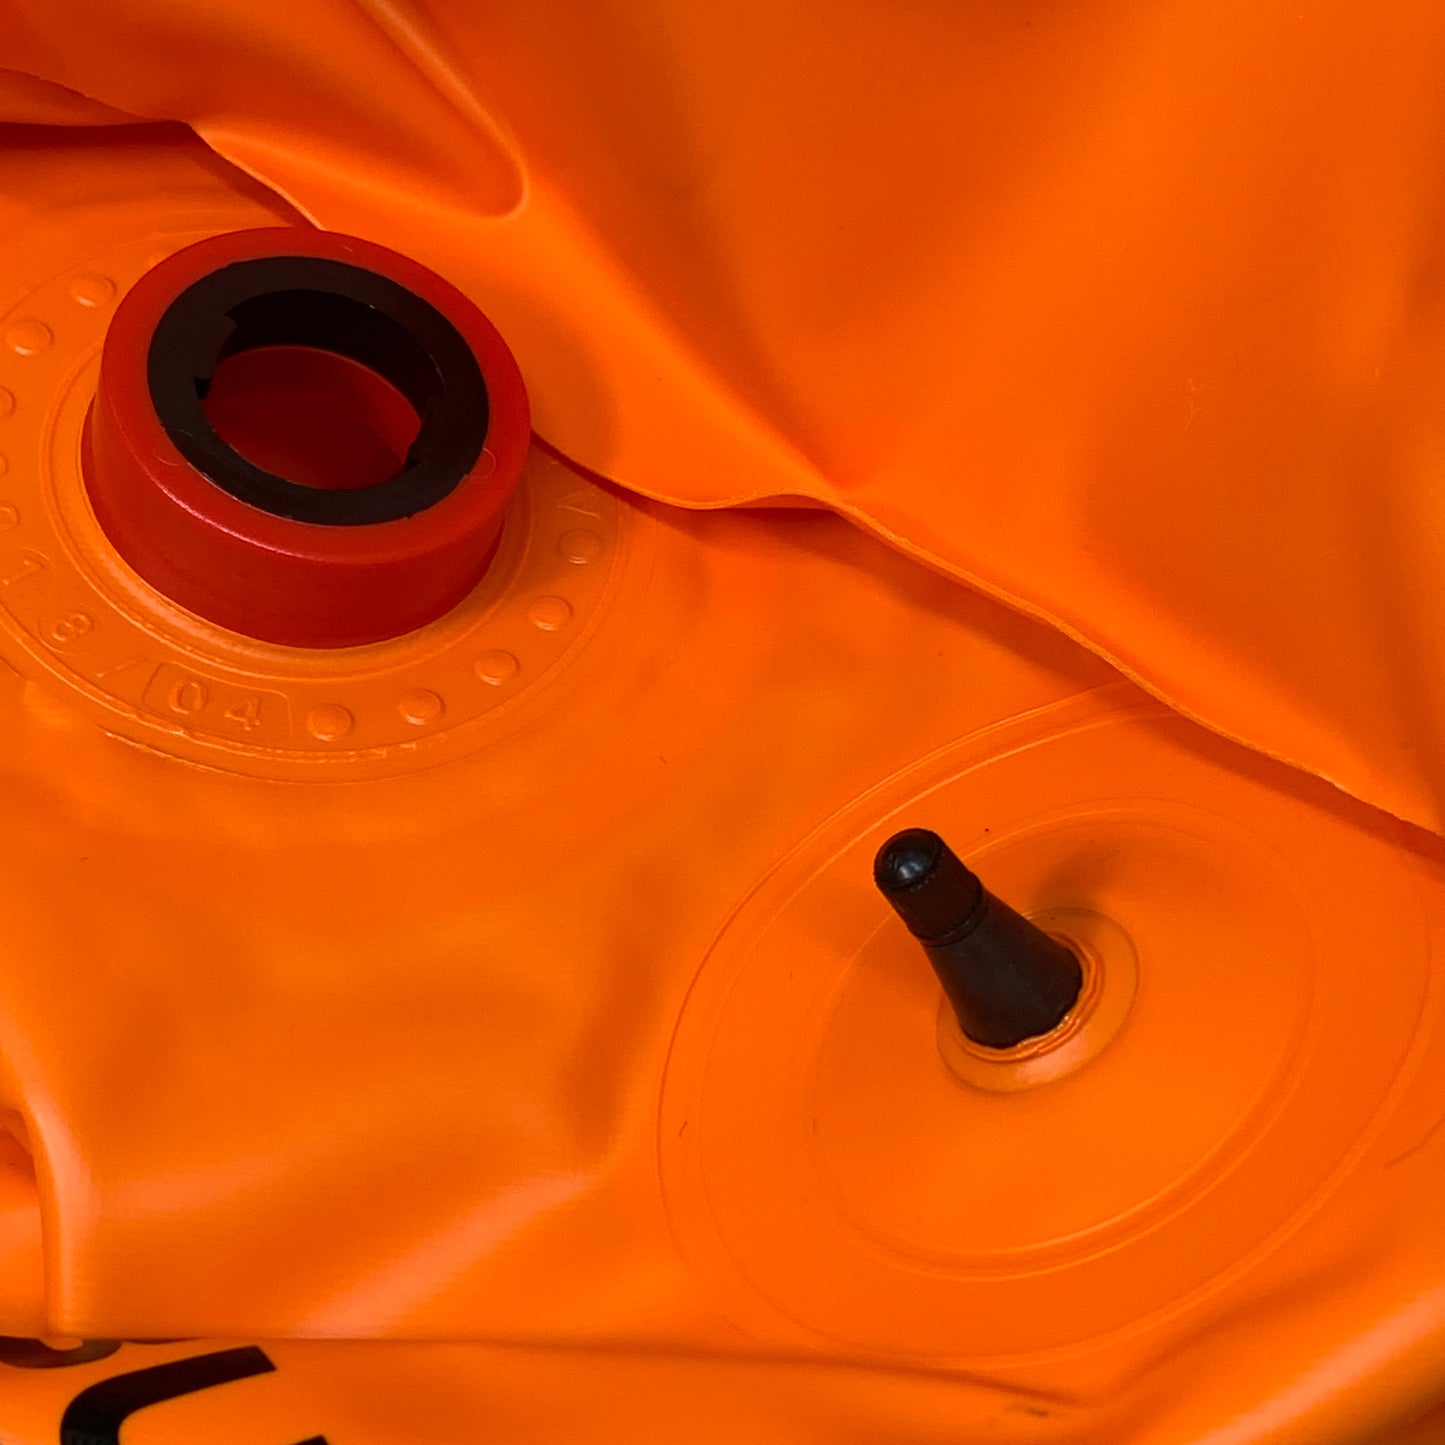 BUSHRANGER X-JACK ARB Exhaust Inflatable Recovery Jack 4x4 Gear Orange 72X10 (New)